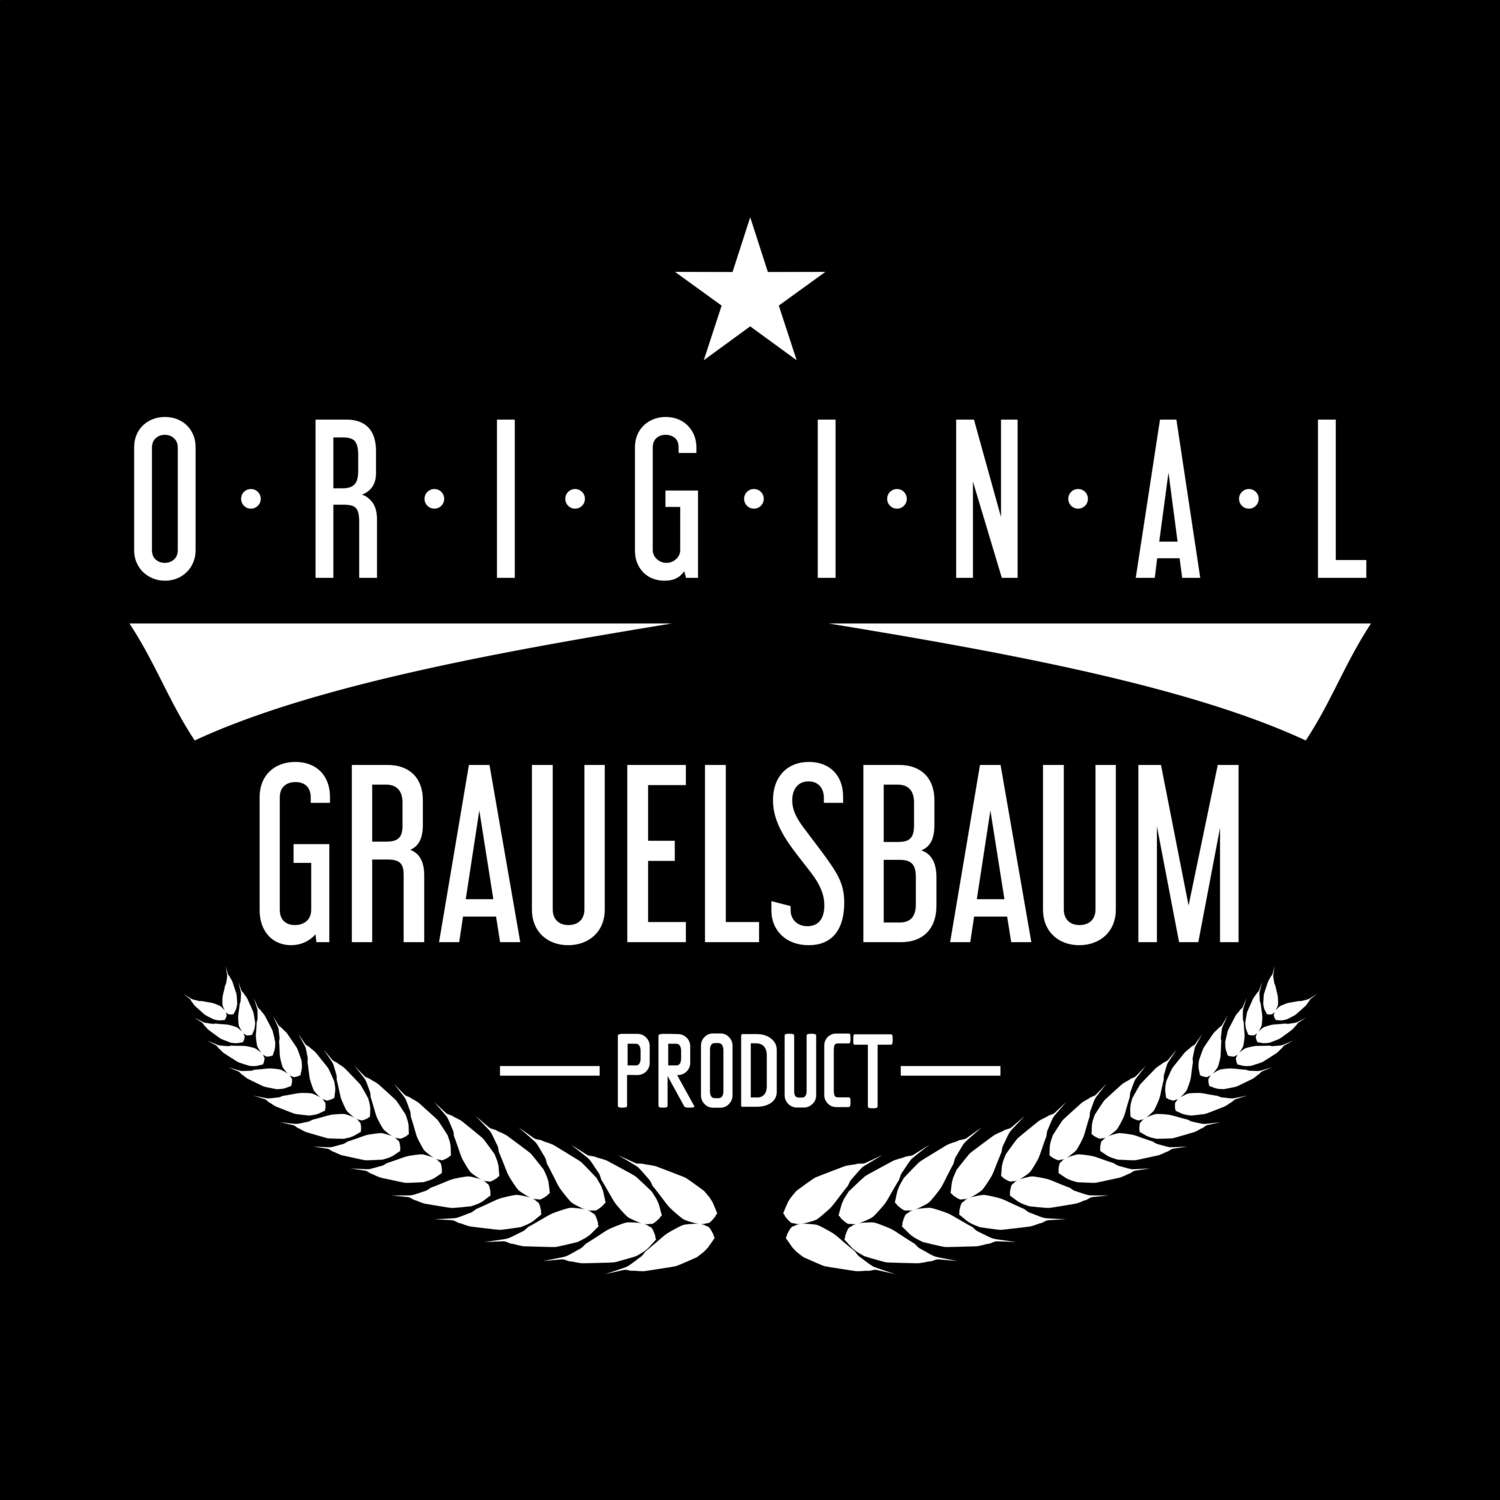 Grauelsbaum T-Shirt »Original Product«